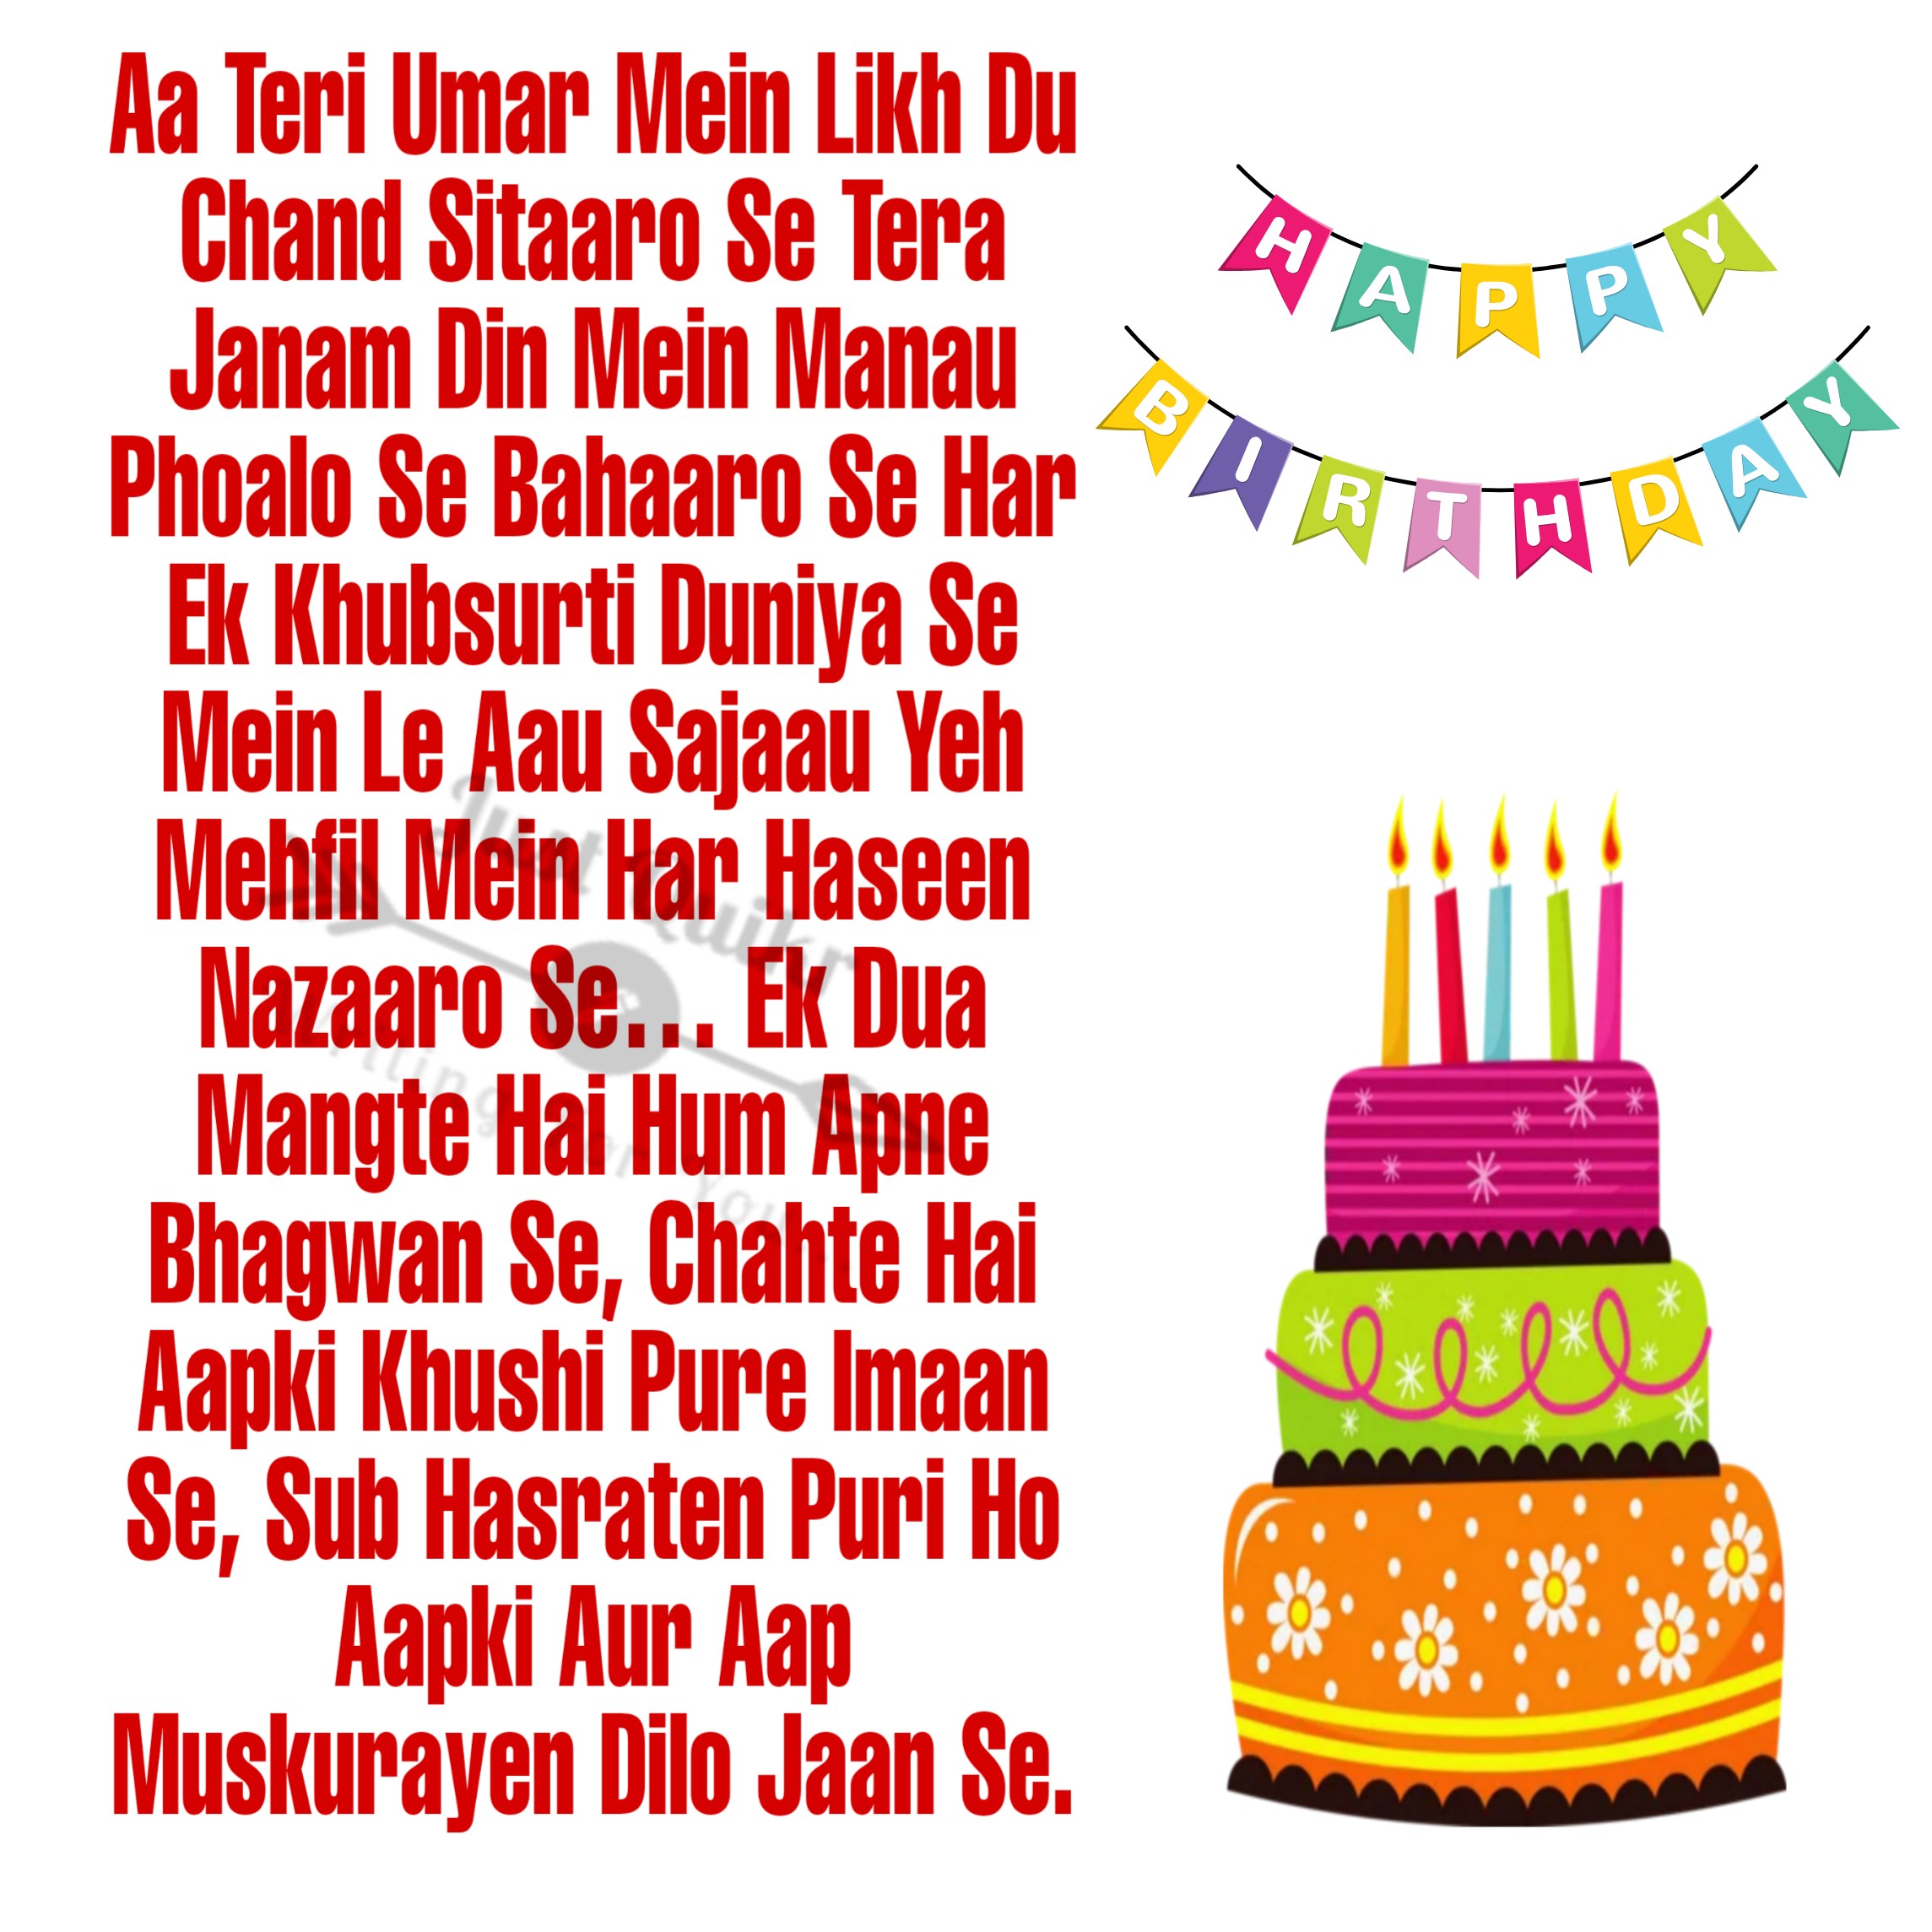 Happy Birthday Cake HD Pics Images with Shayari Sayings for Chachi Ji